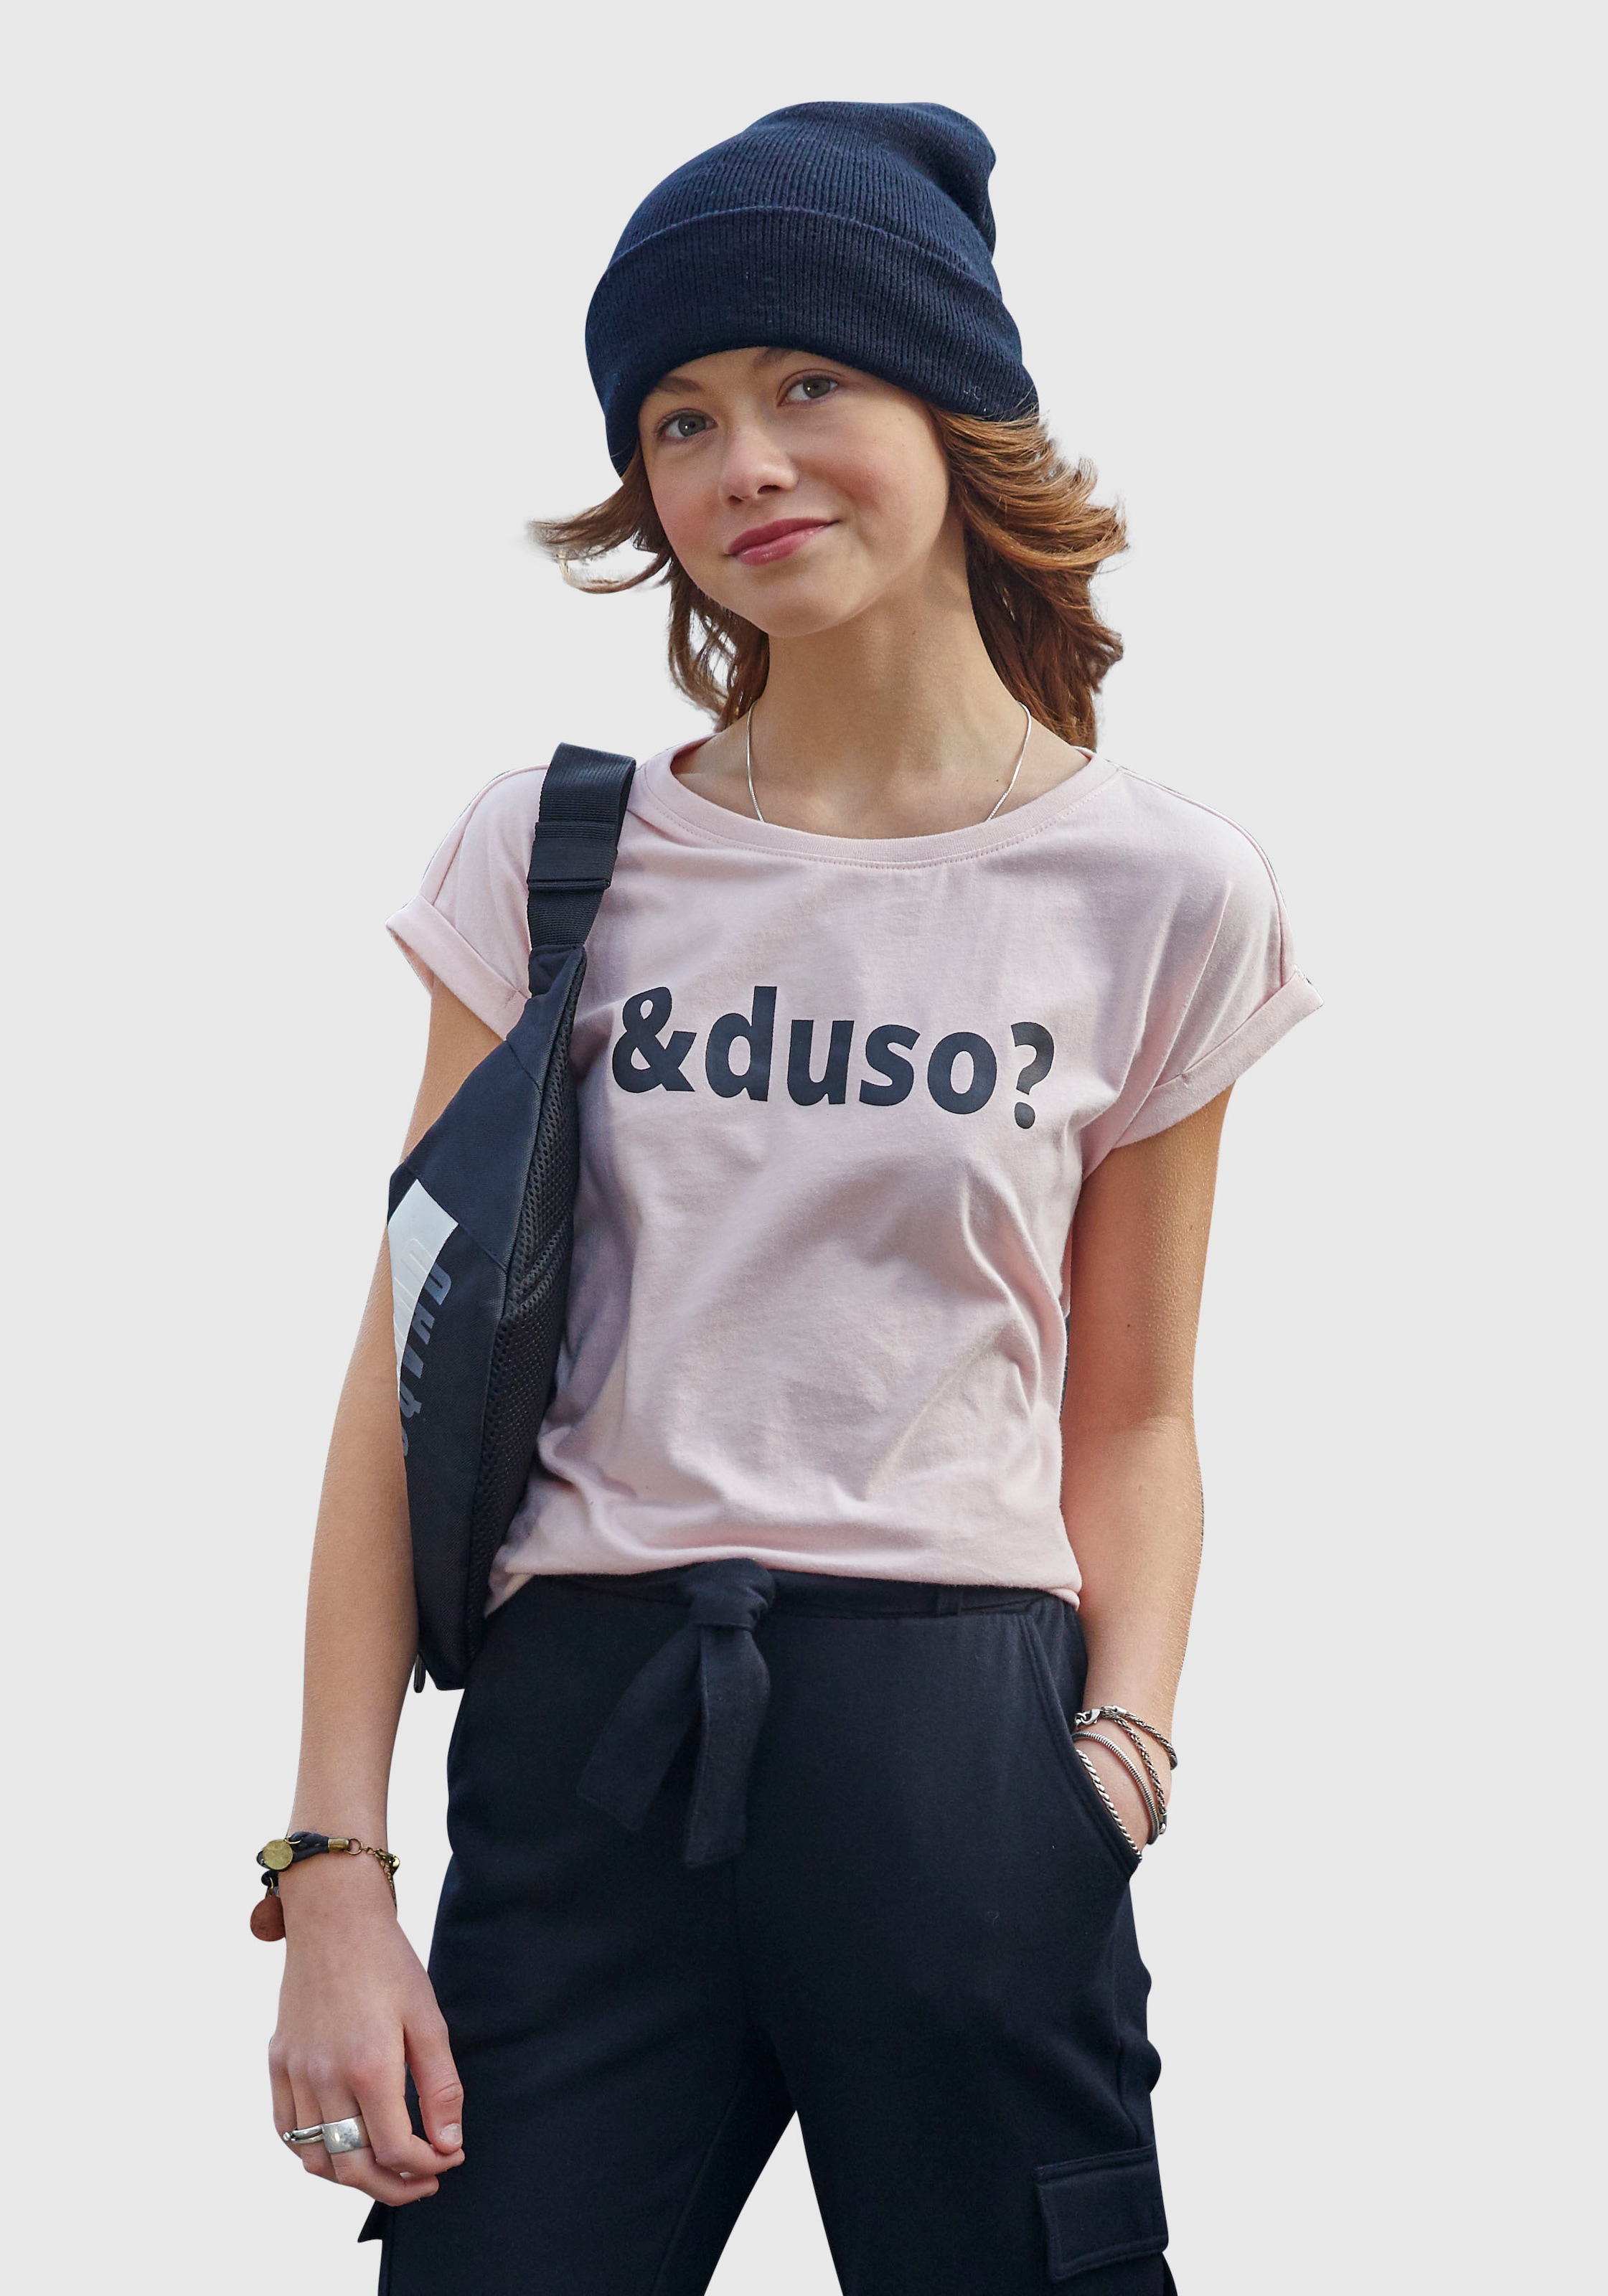 KIDSWORLD T-Shirt »&duso?«, in bequemer Passform